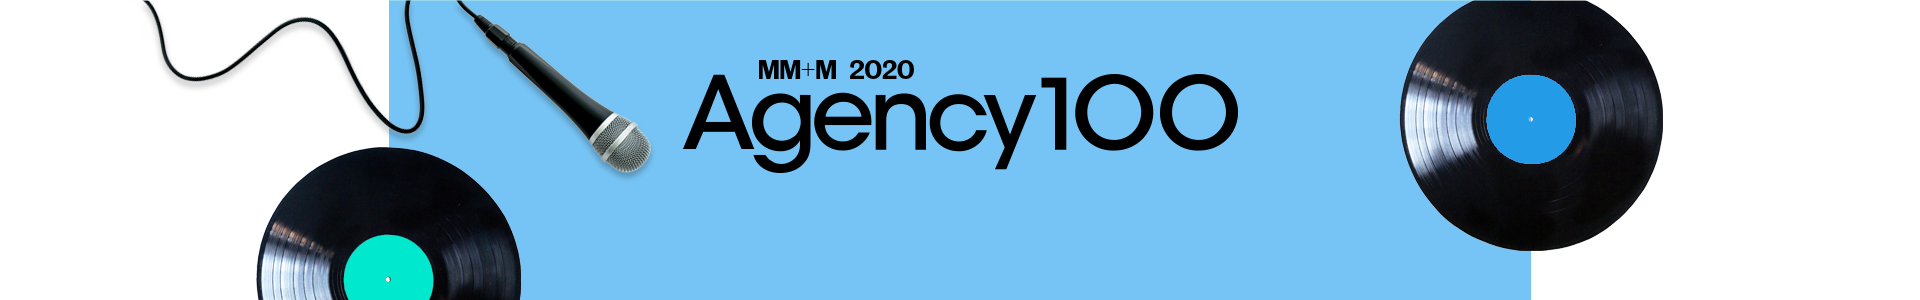 MM+M Agency100 Banner